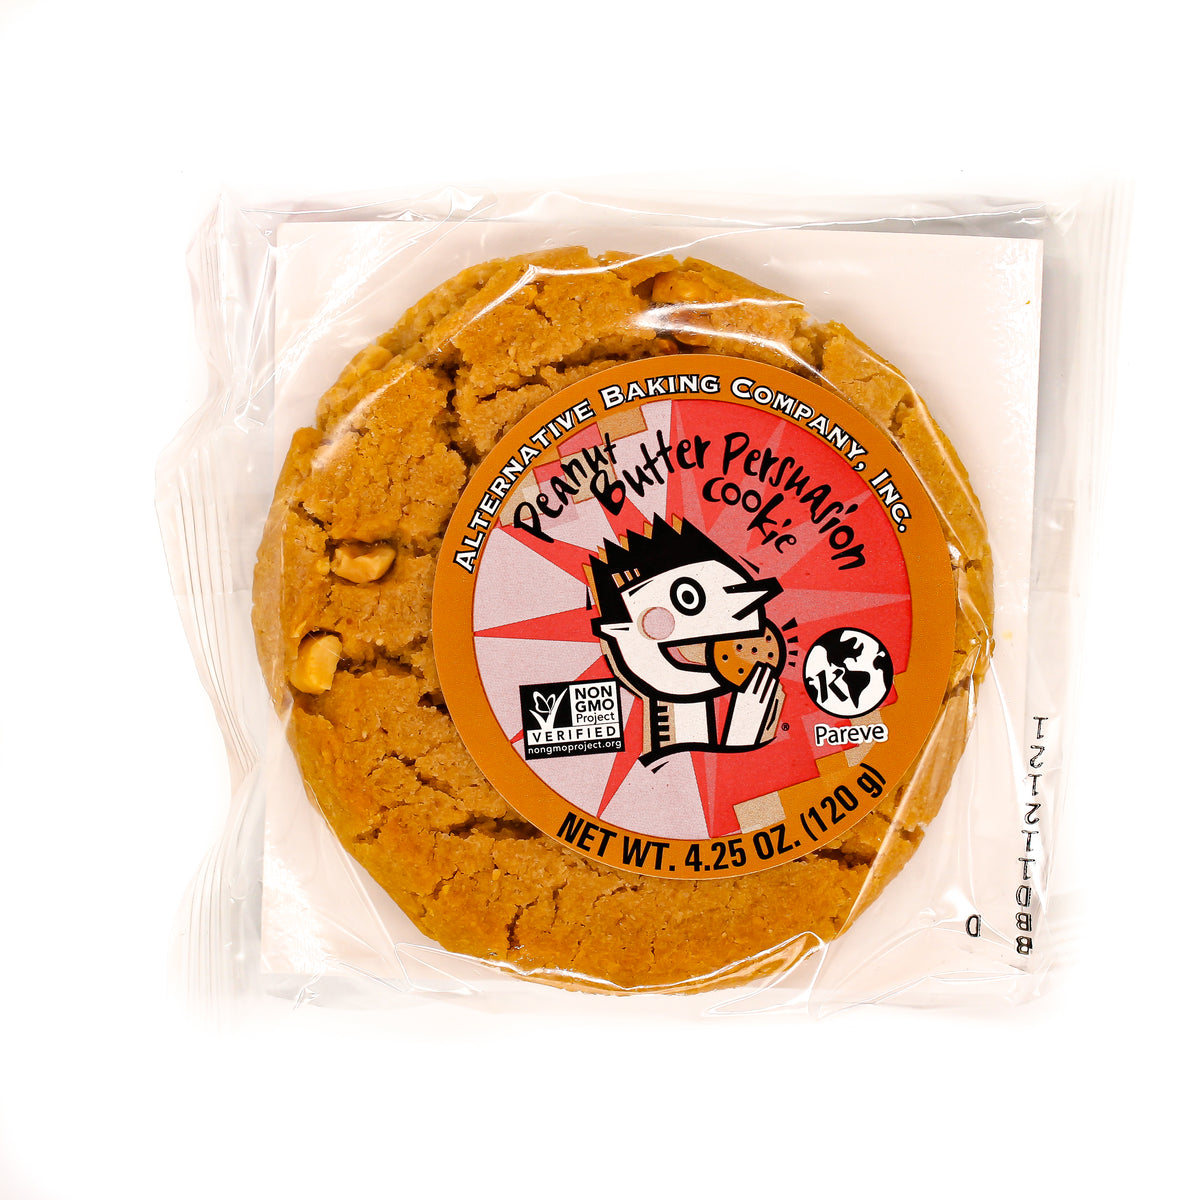 Alternative Baking Company Cookie Peanut Butter Persuasion